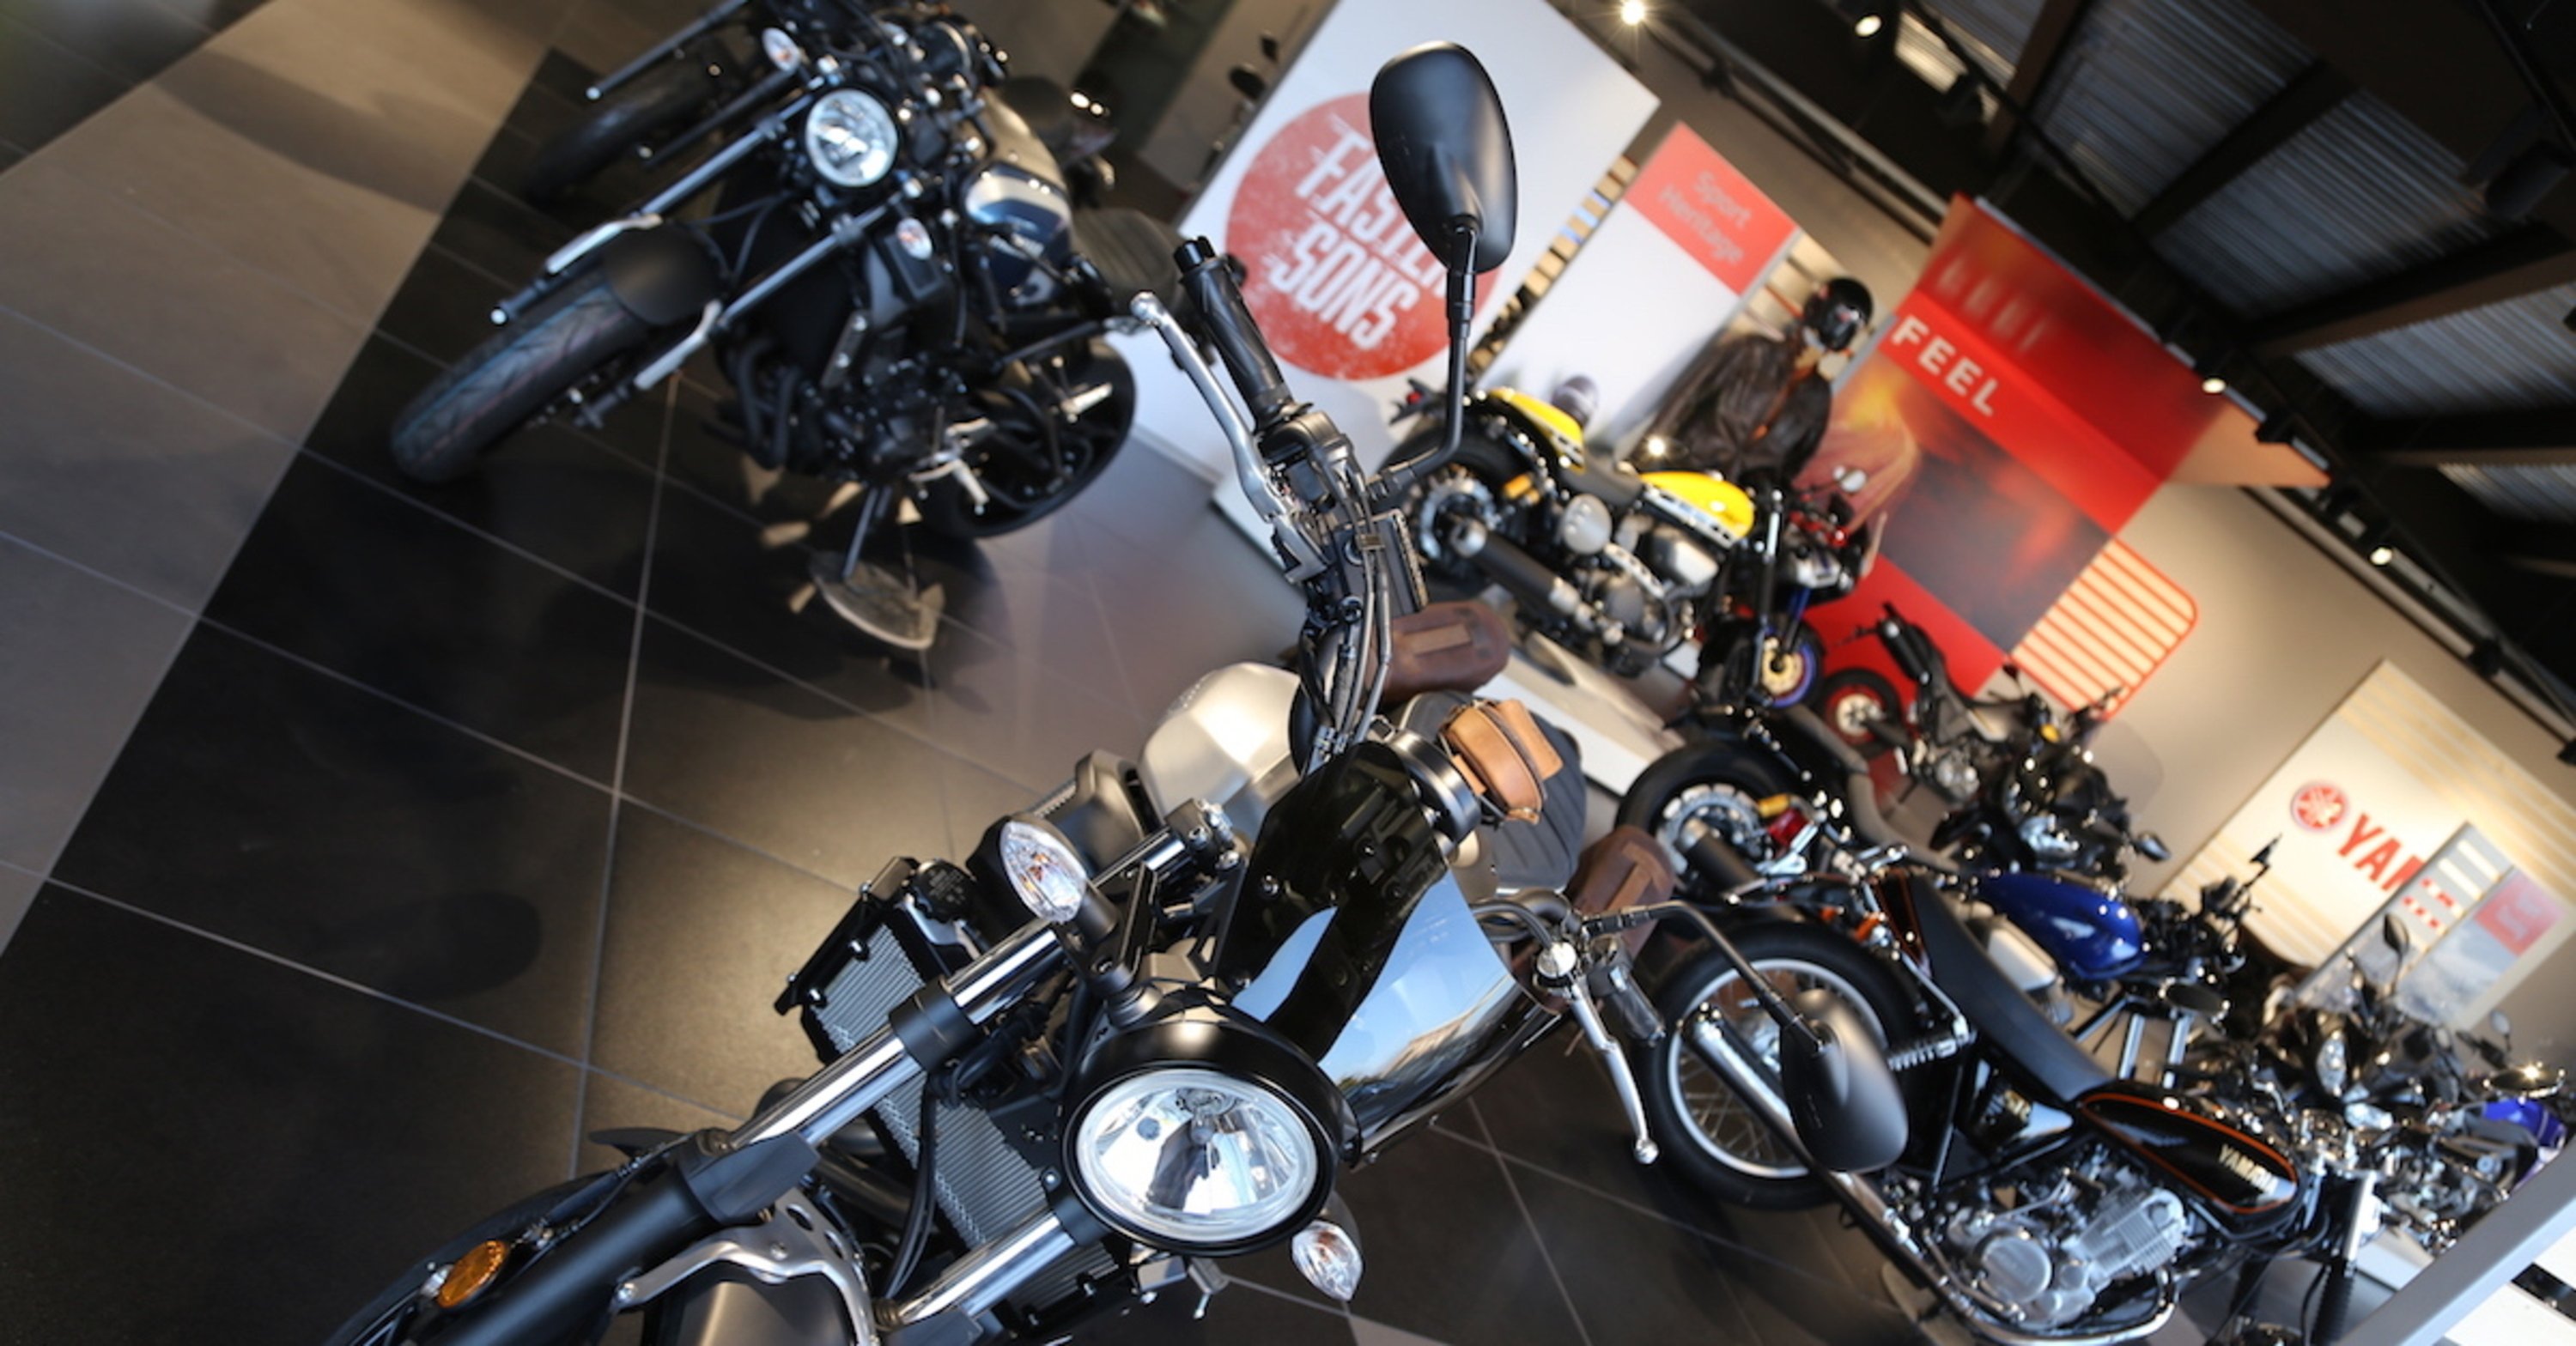 Moto Shop Parma: la nuova Visual Identity Yamaha parte dall&rsquo;Italia